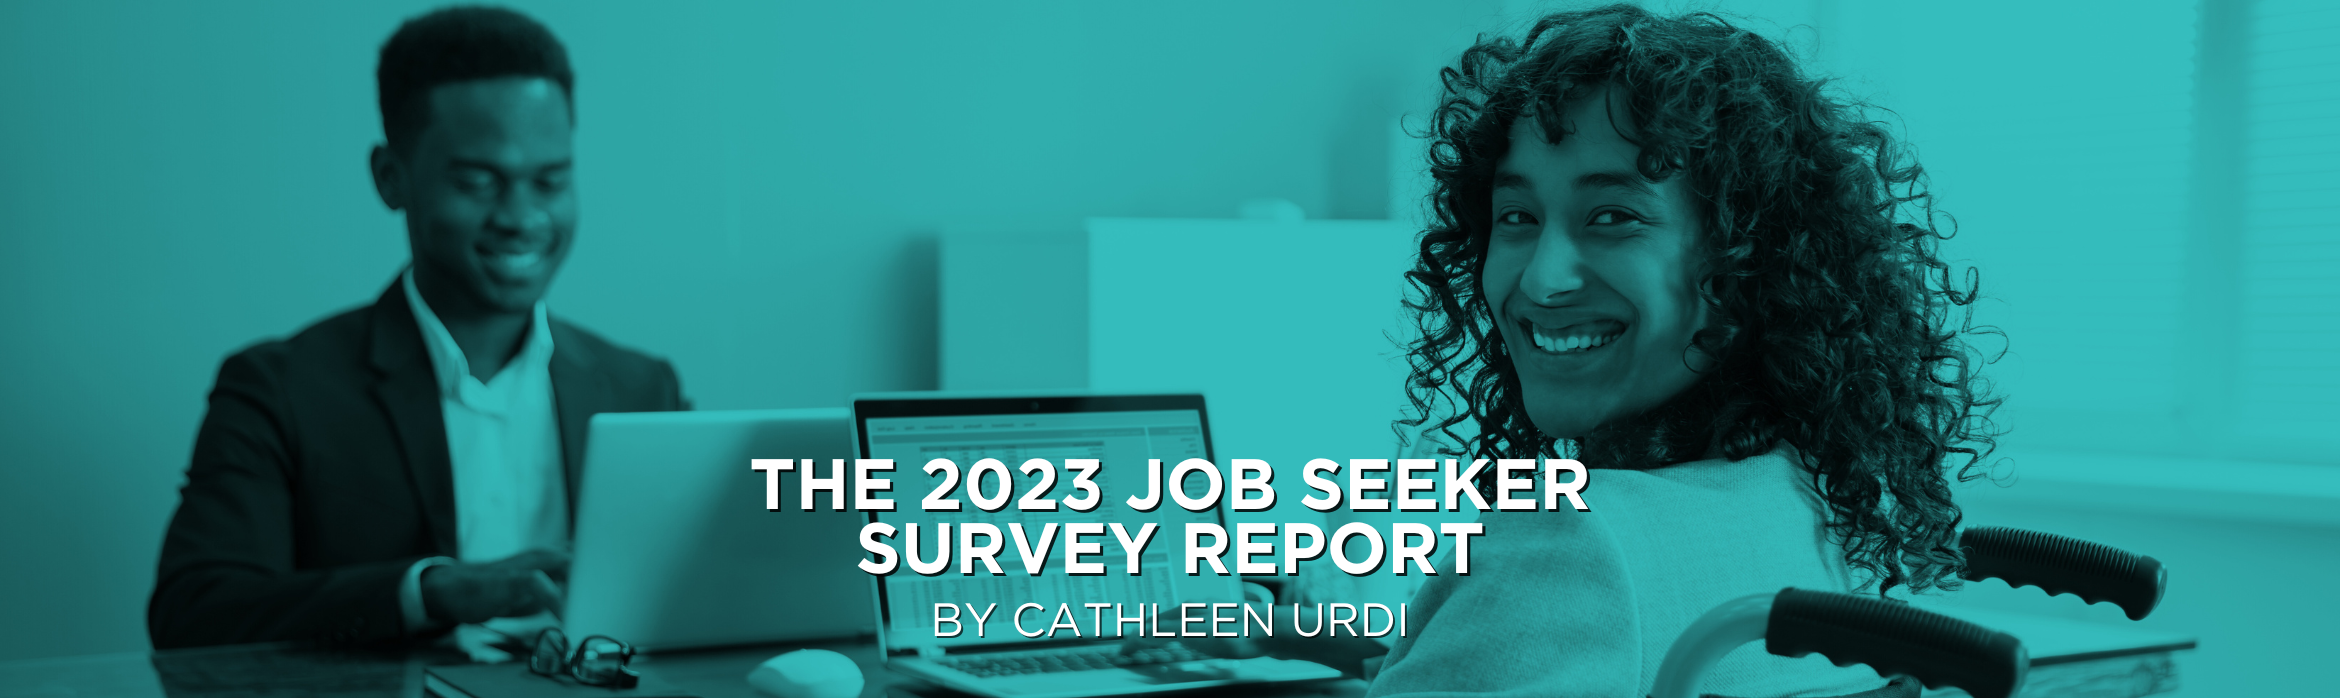 The 2023 Job Seeker Survey Report